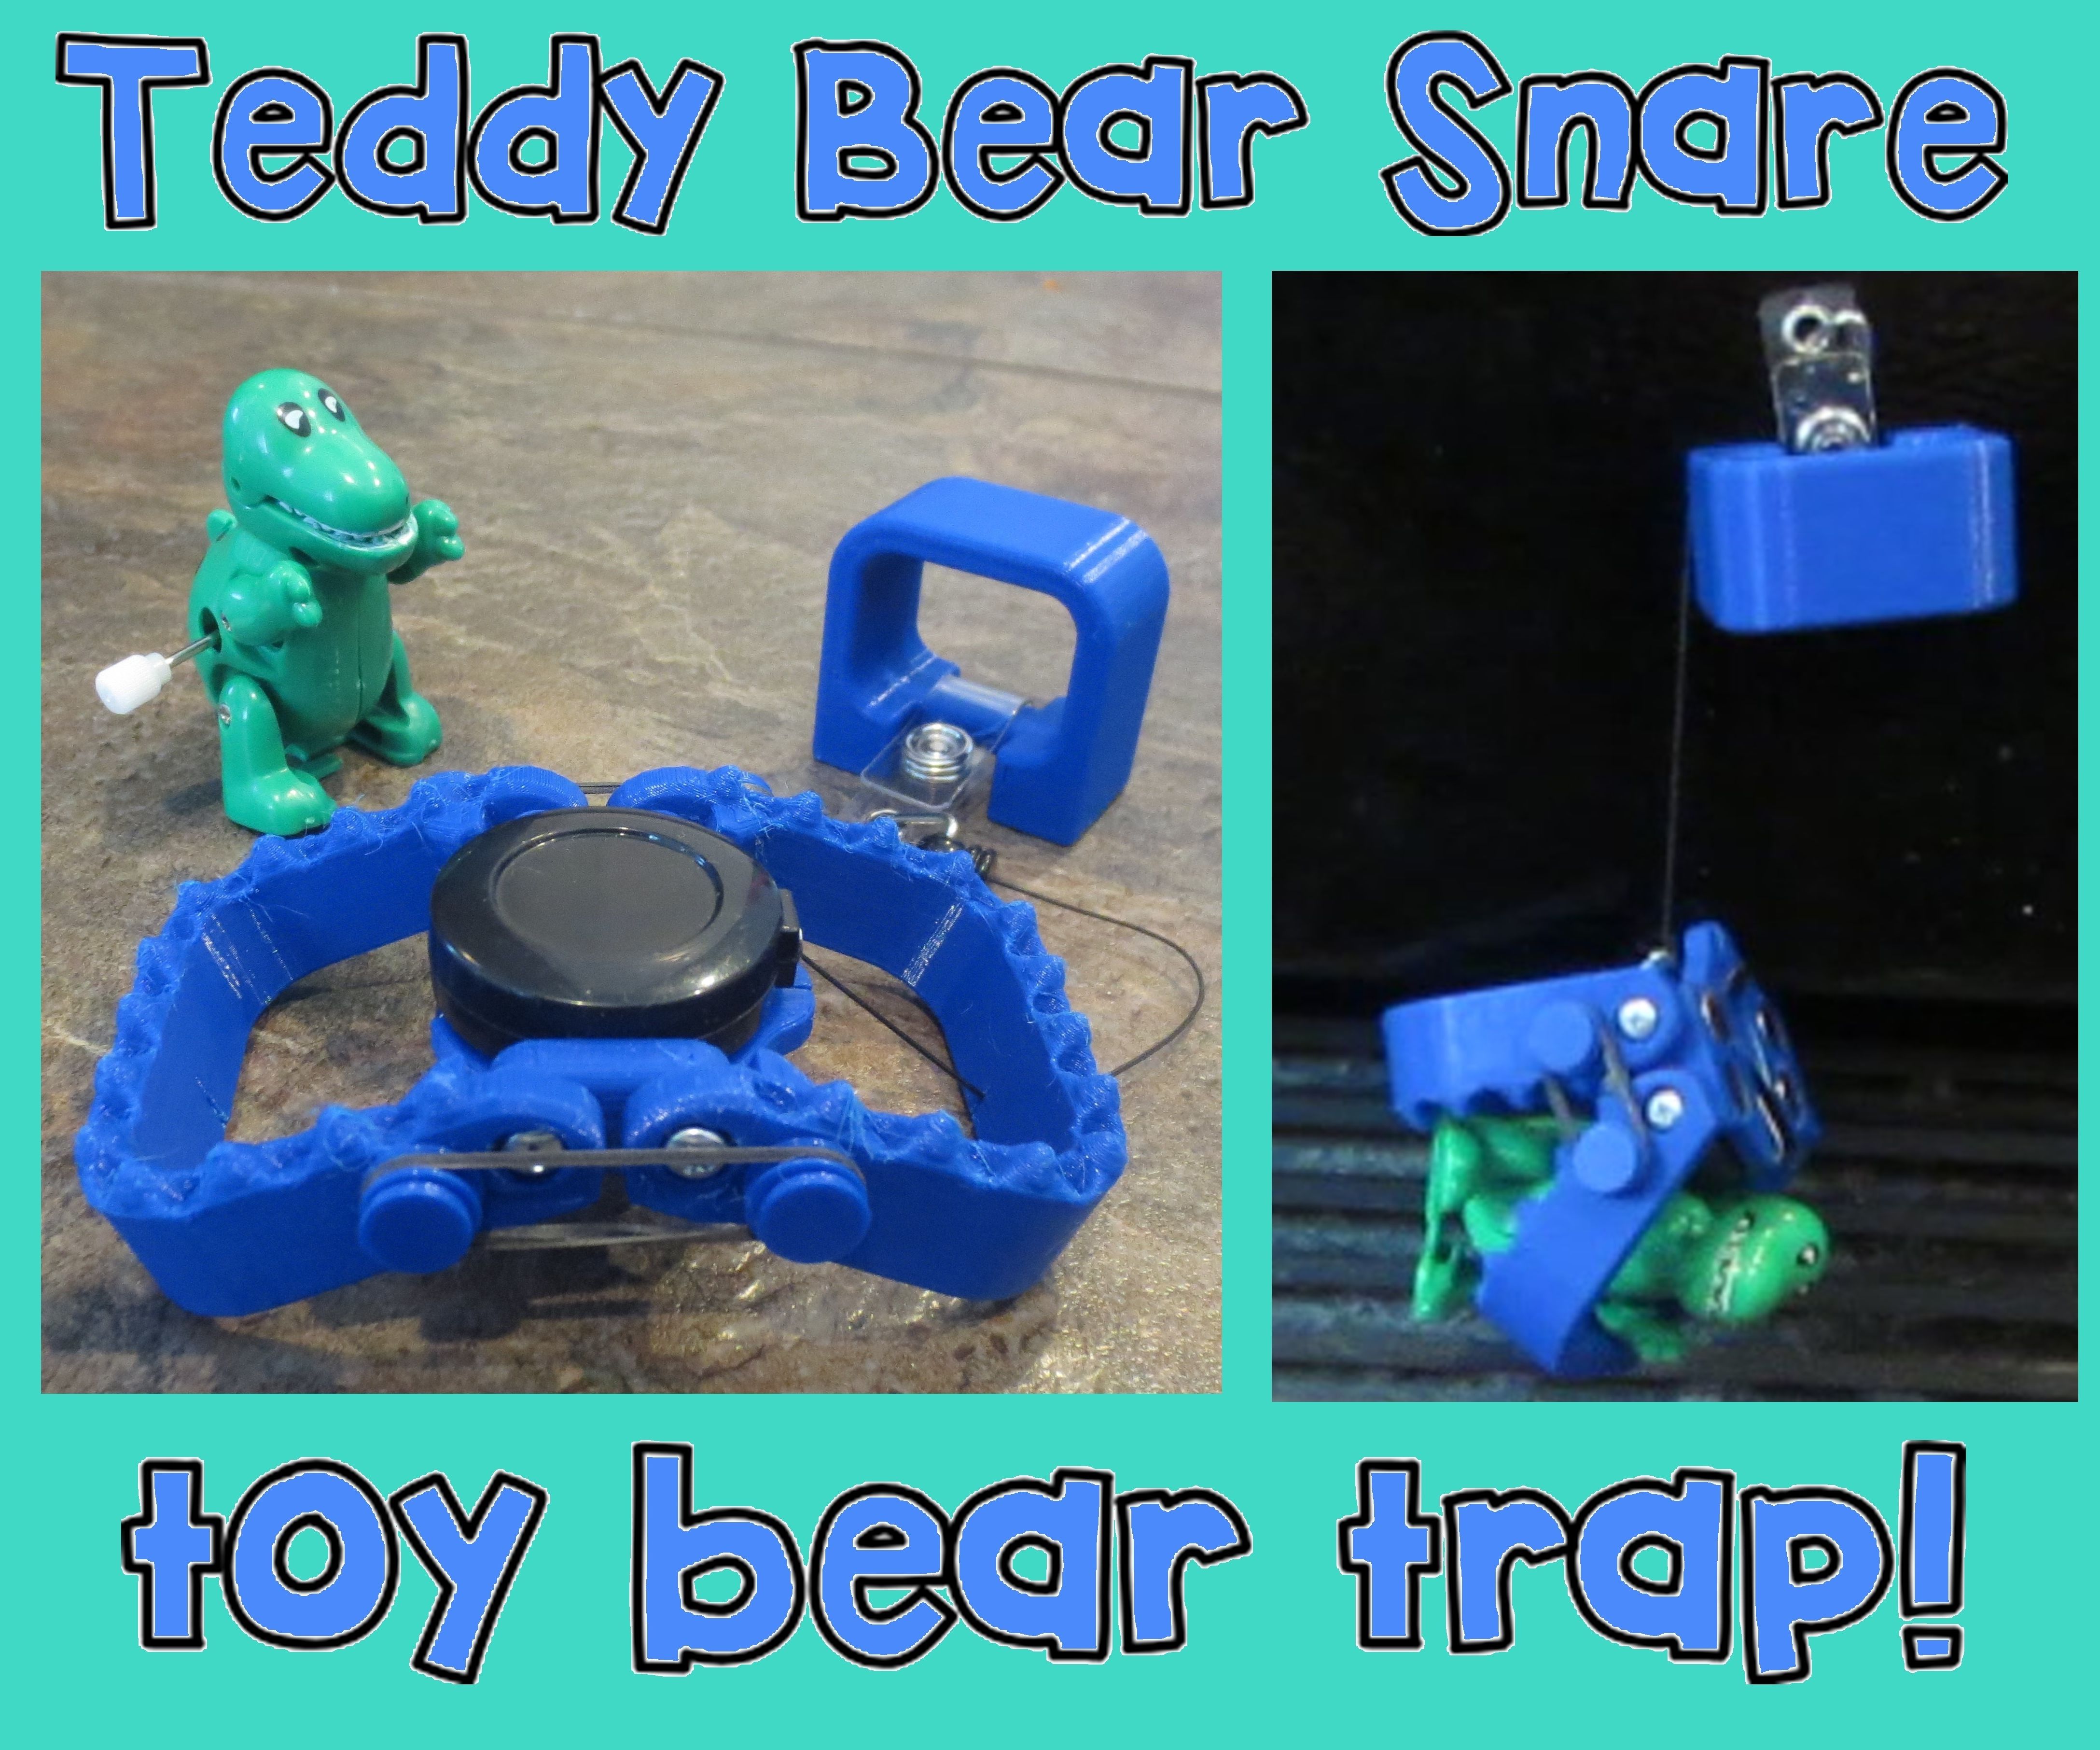 "Teddy Bear Snare" Toy Bear Trap